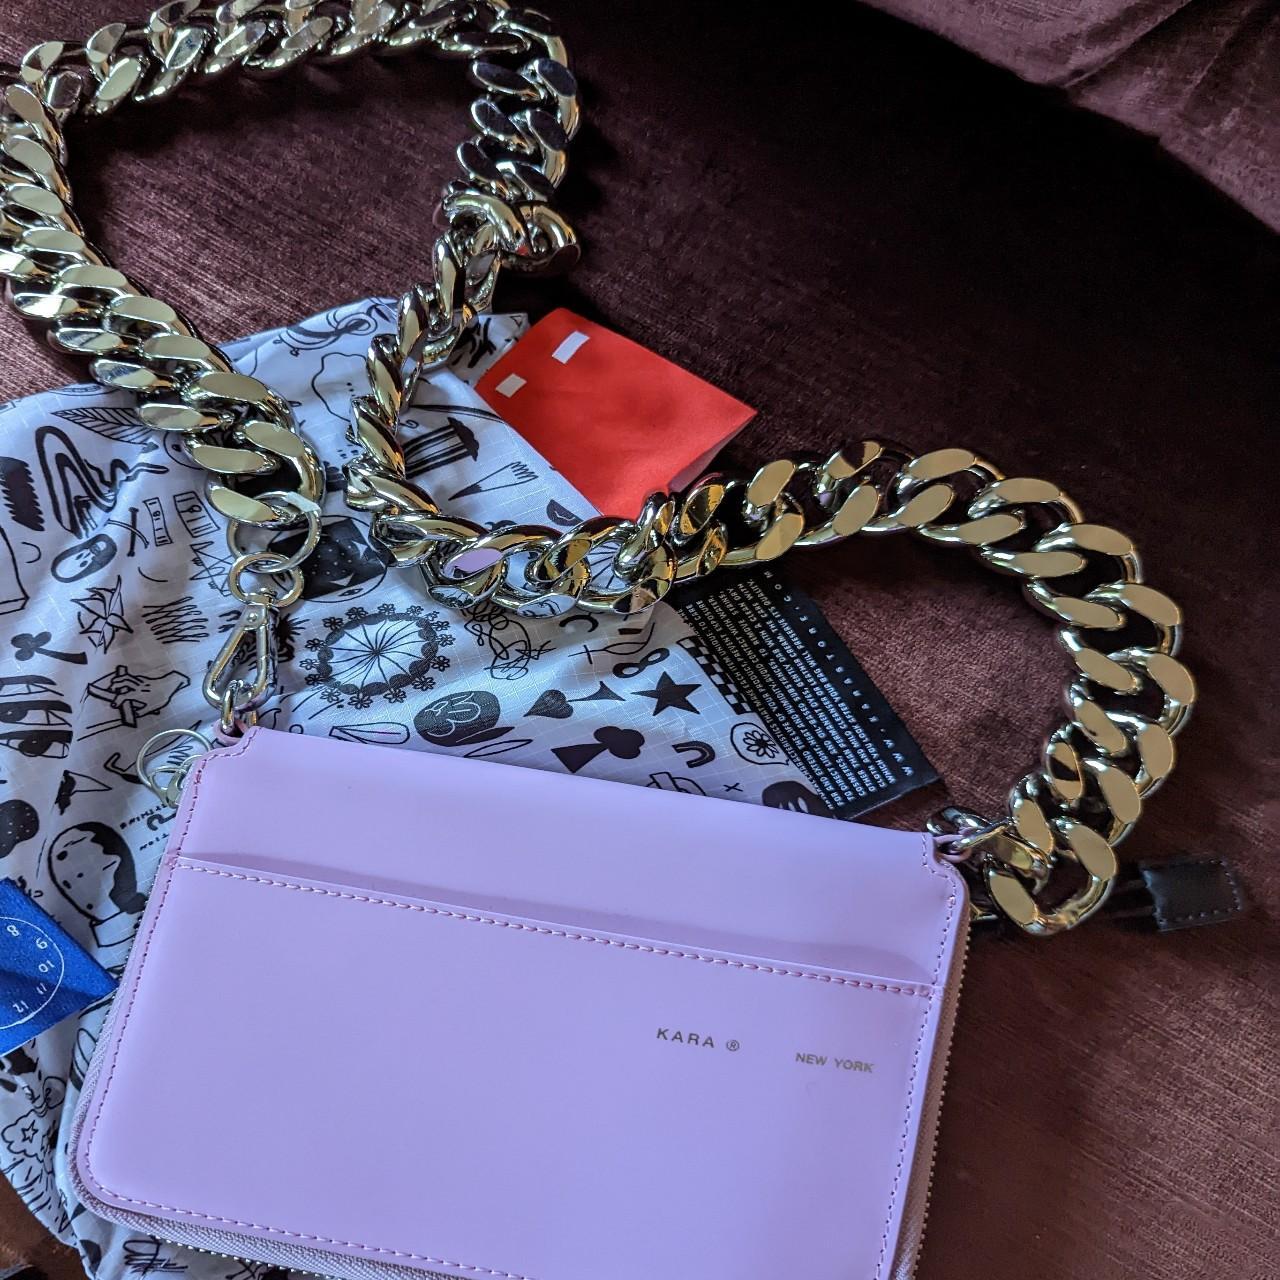 Kara Women's Purple and Silver Bag